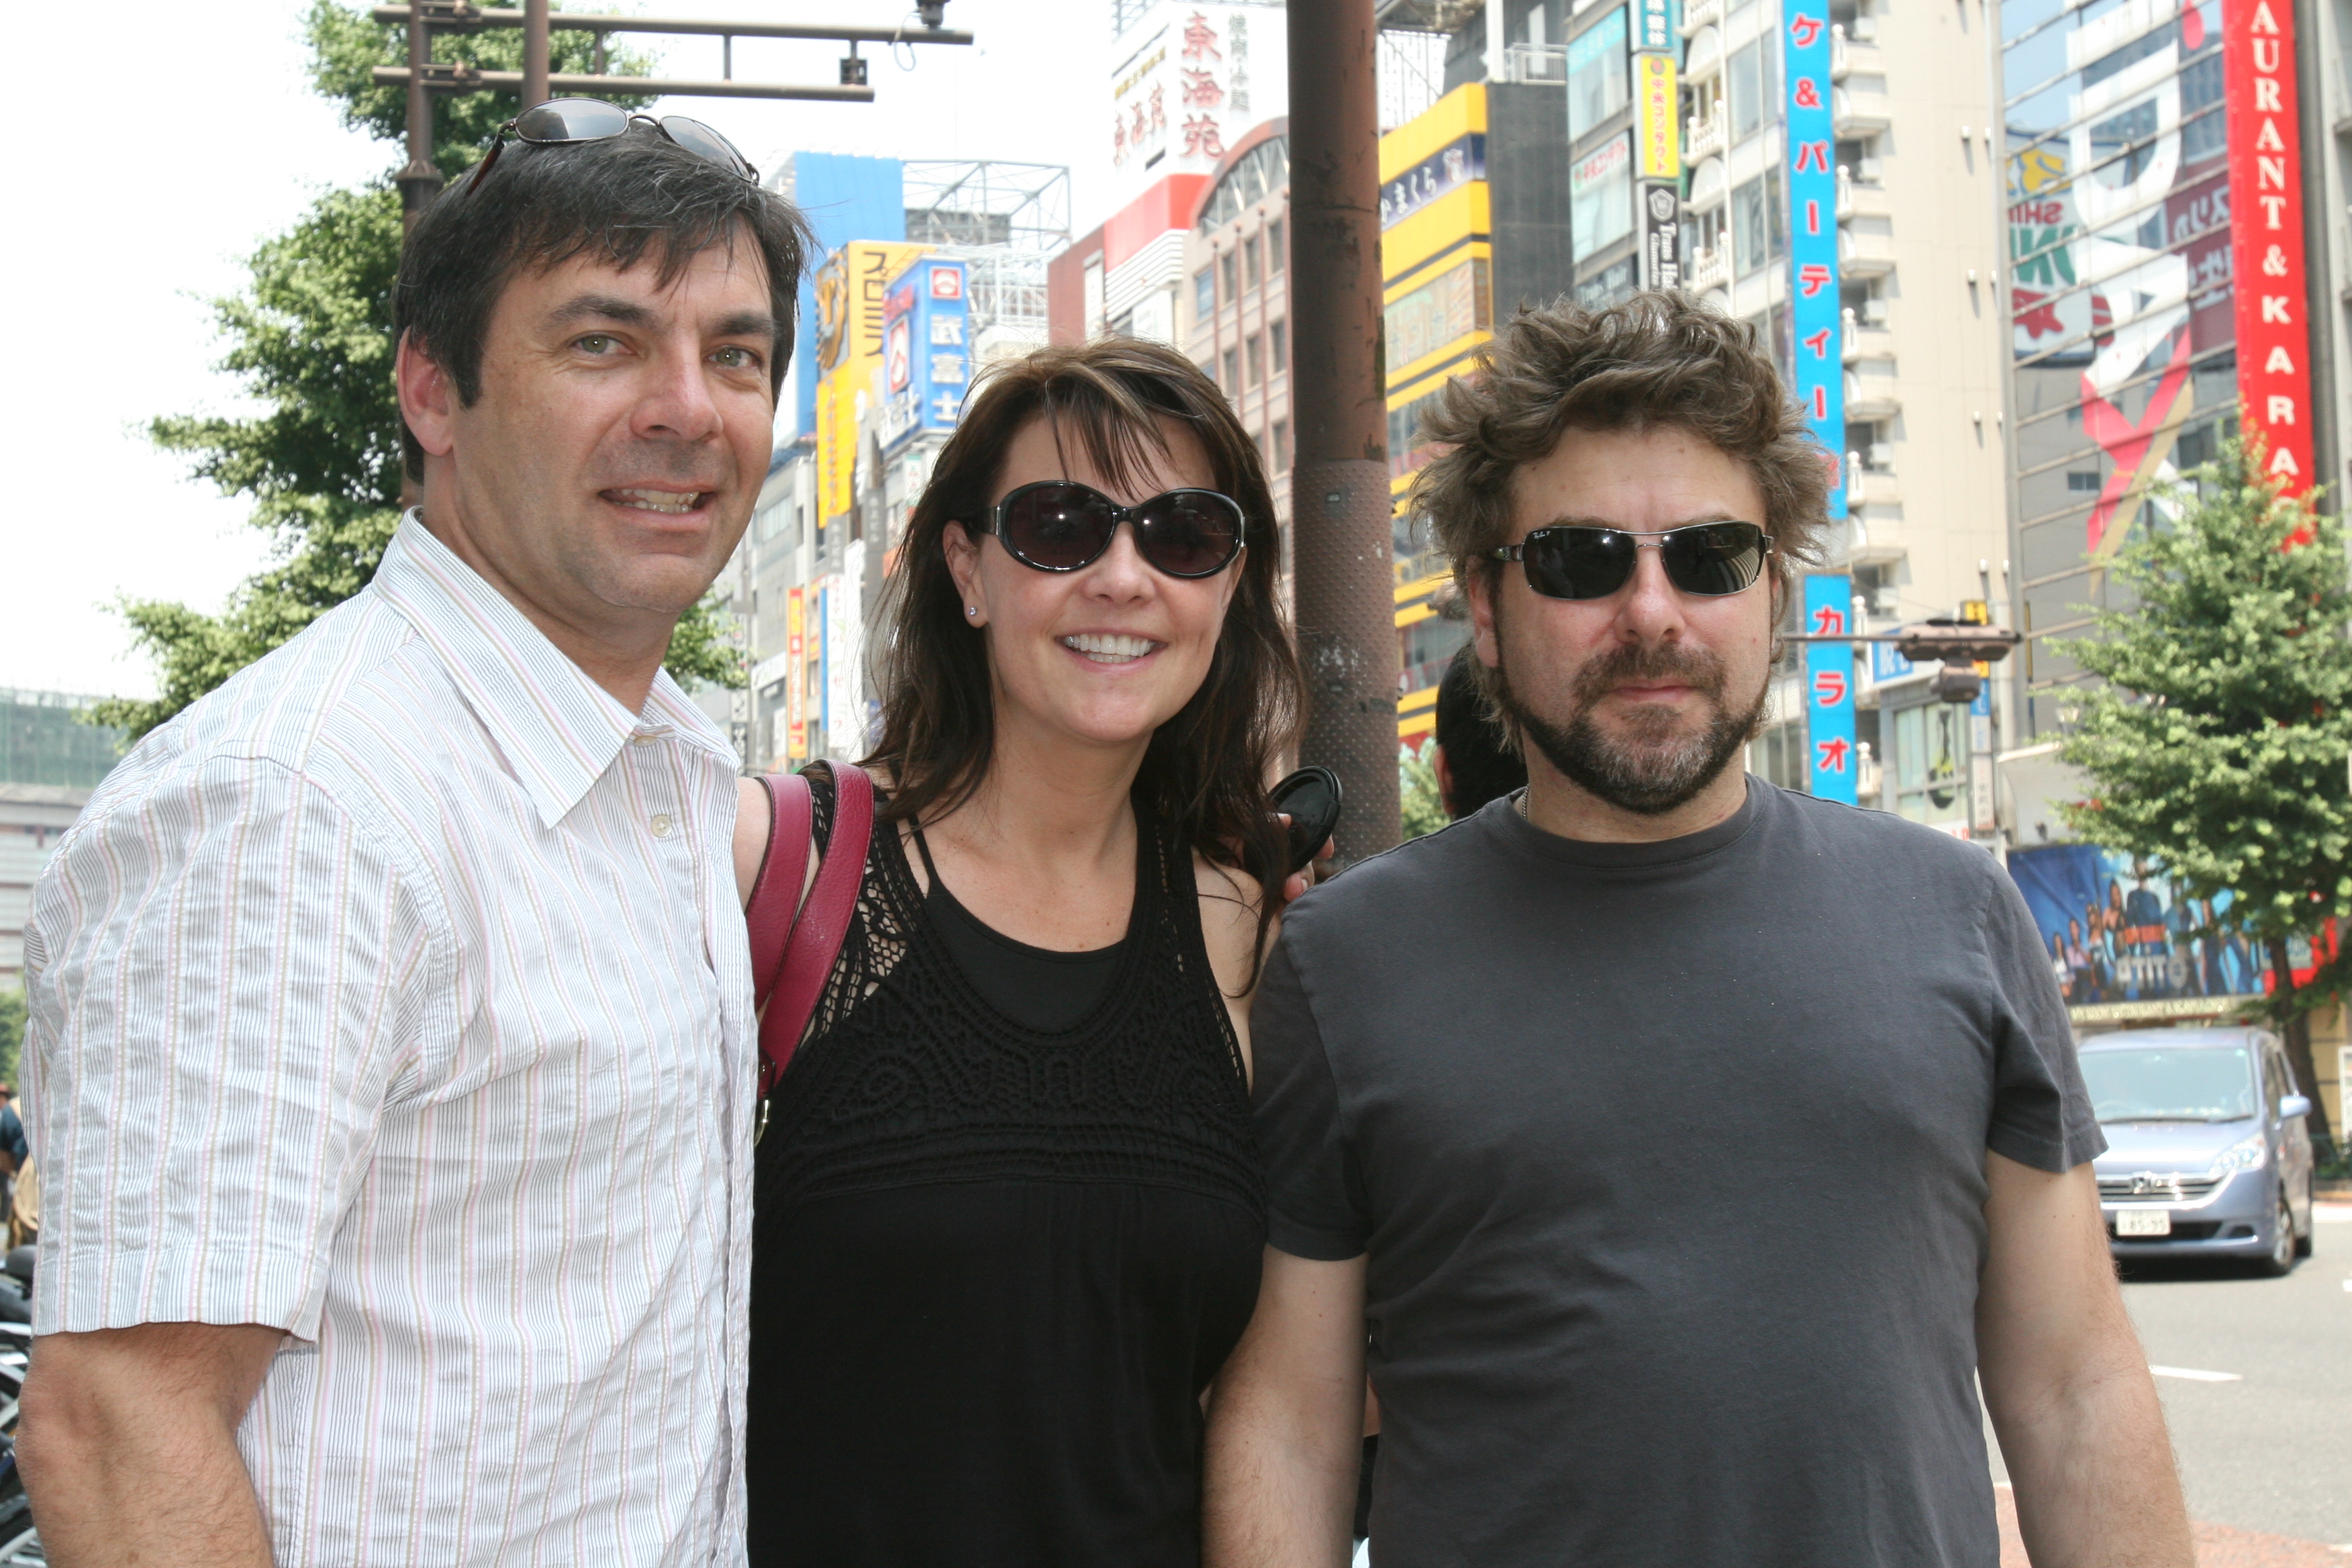 Sanctuary Executive Producers Martin Wood, Amanda Tapping and Damian Kindler in Tokyo Japan